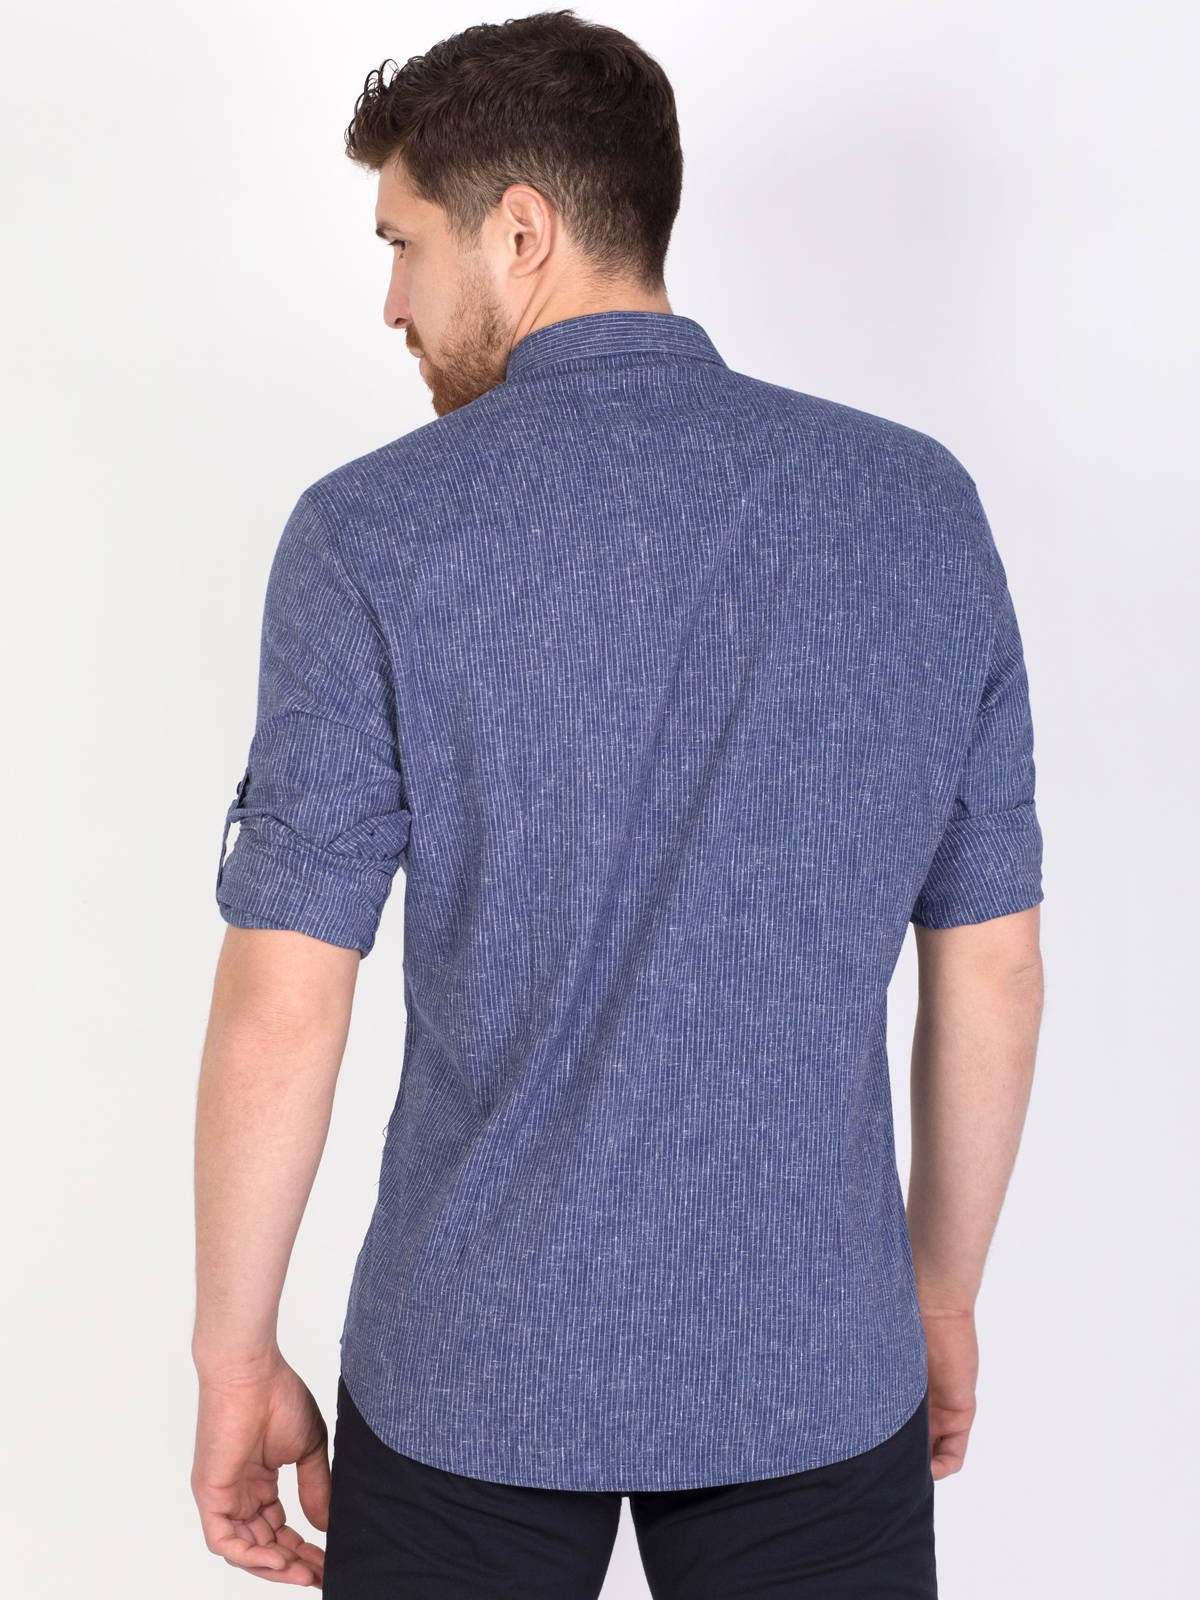 Shirt in dark blue with fine stripes - 21496 € 24.75 img4